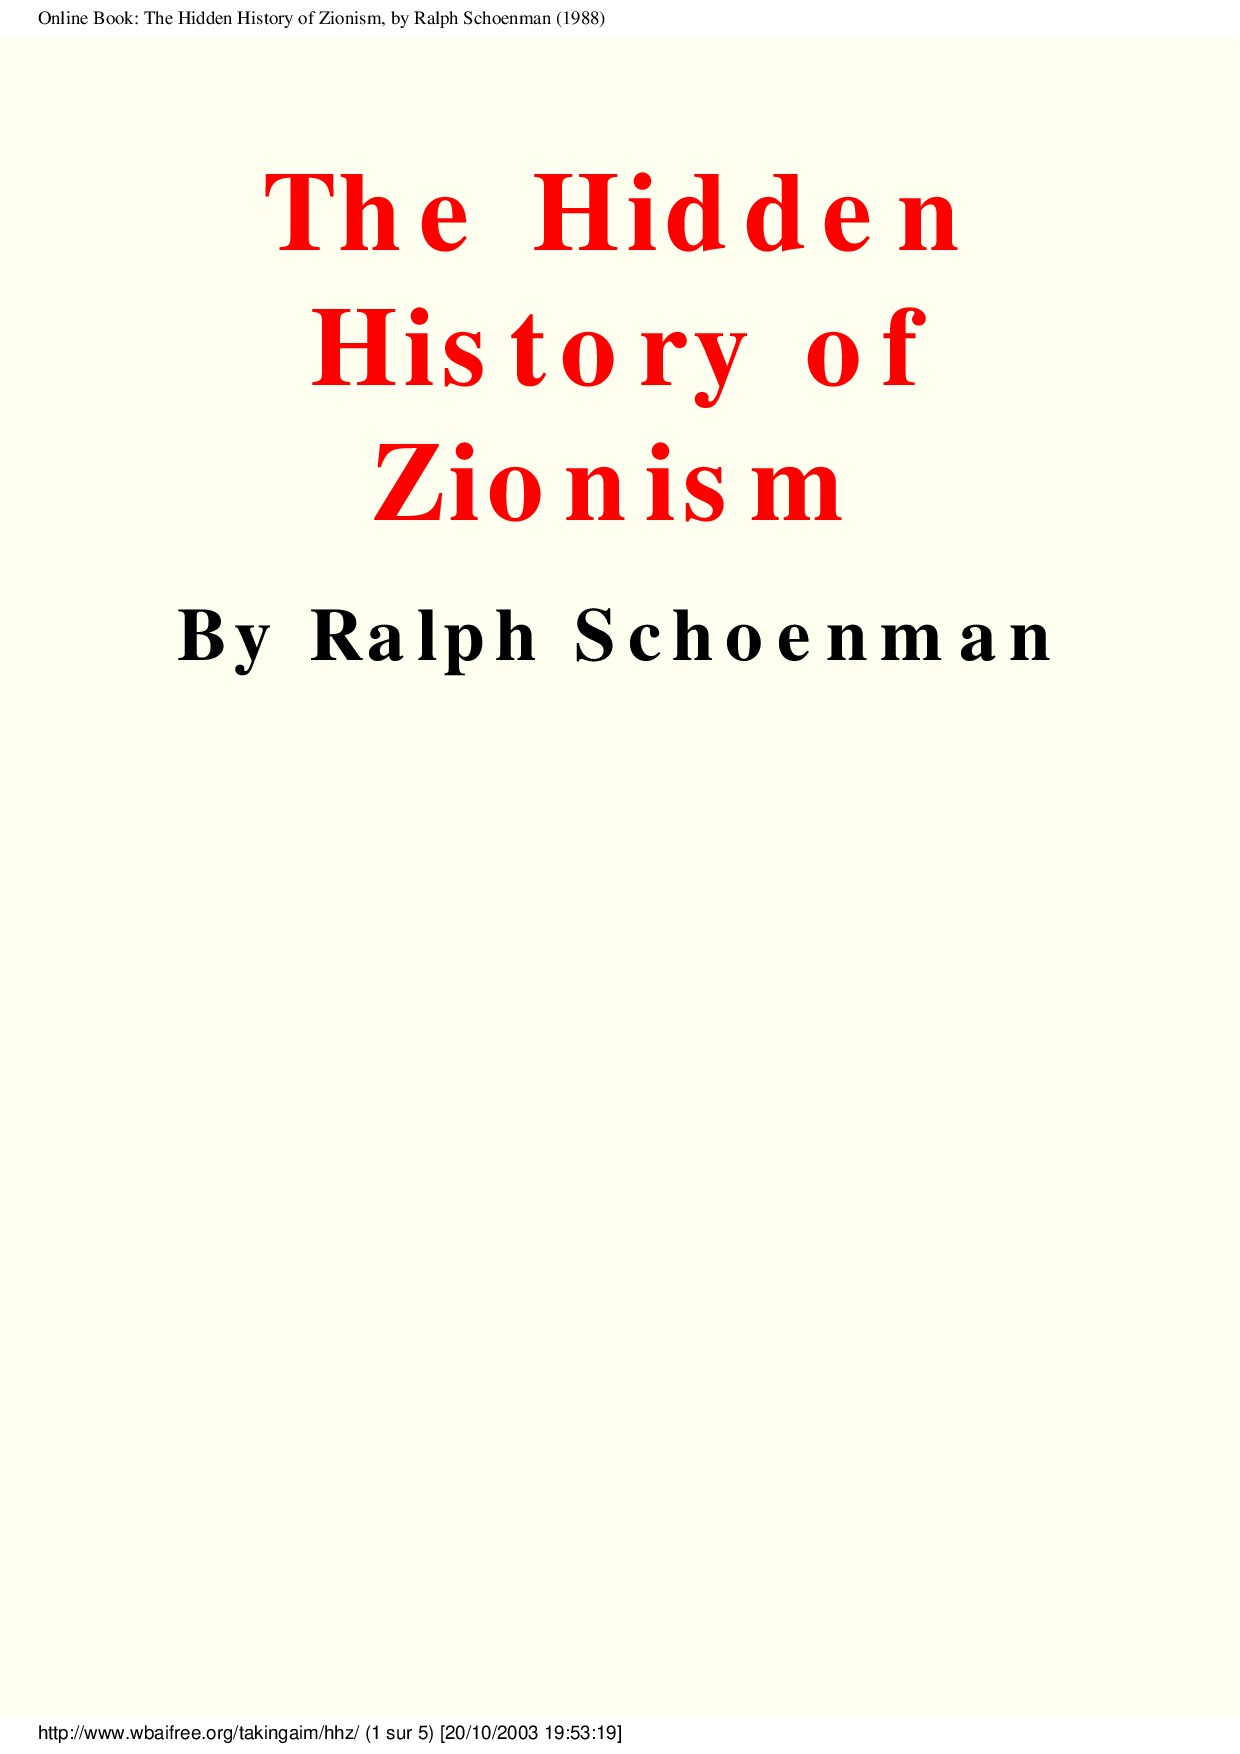 Online Book: The Hidden History of Zionism, by Ralph Schoenman (1988)